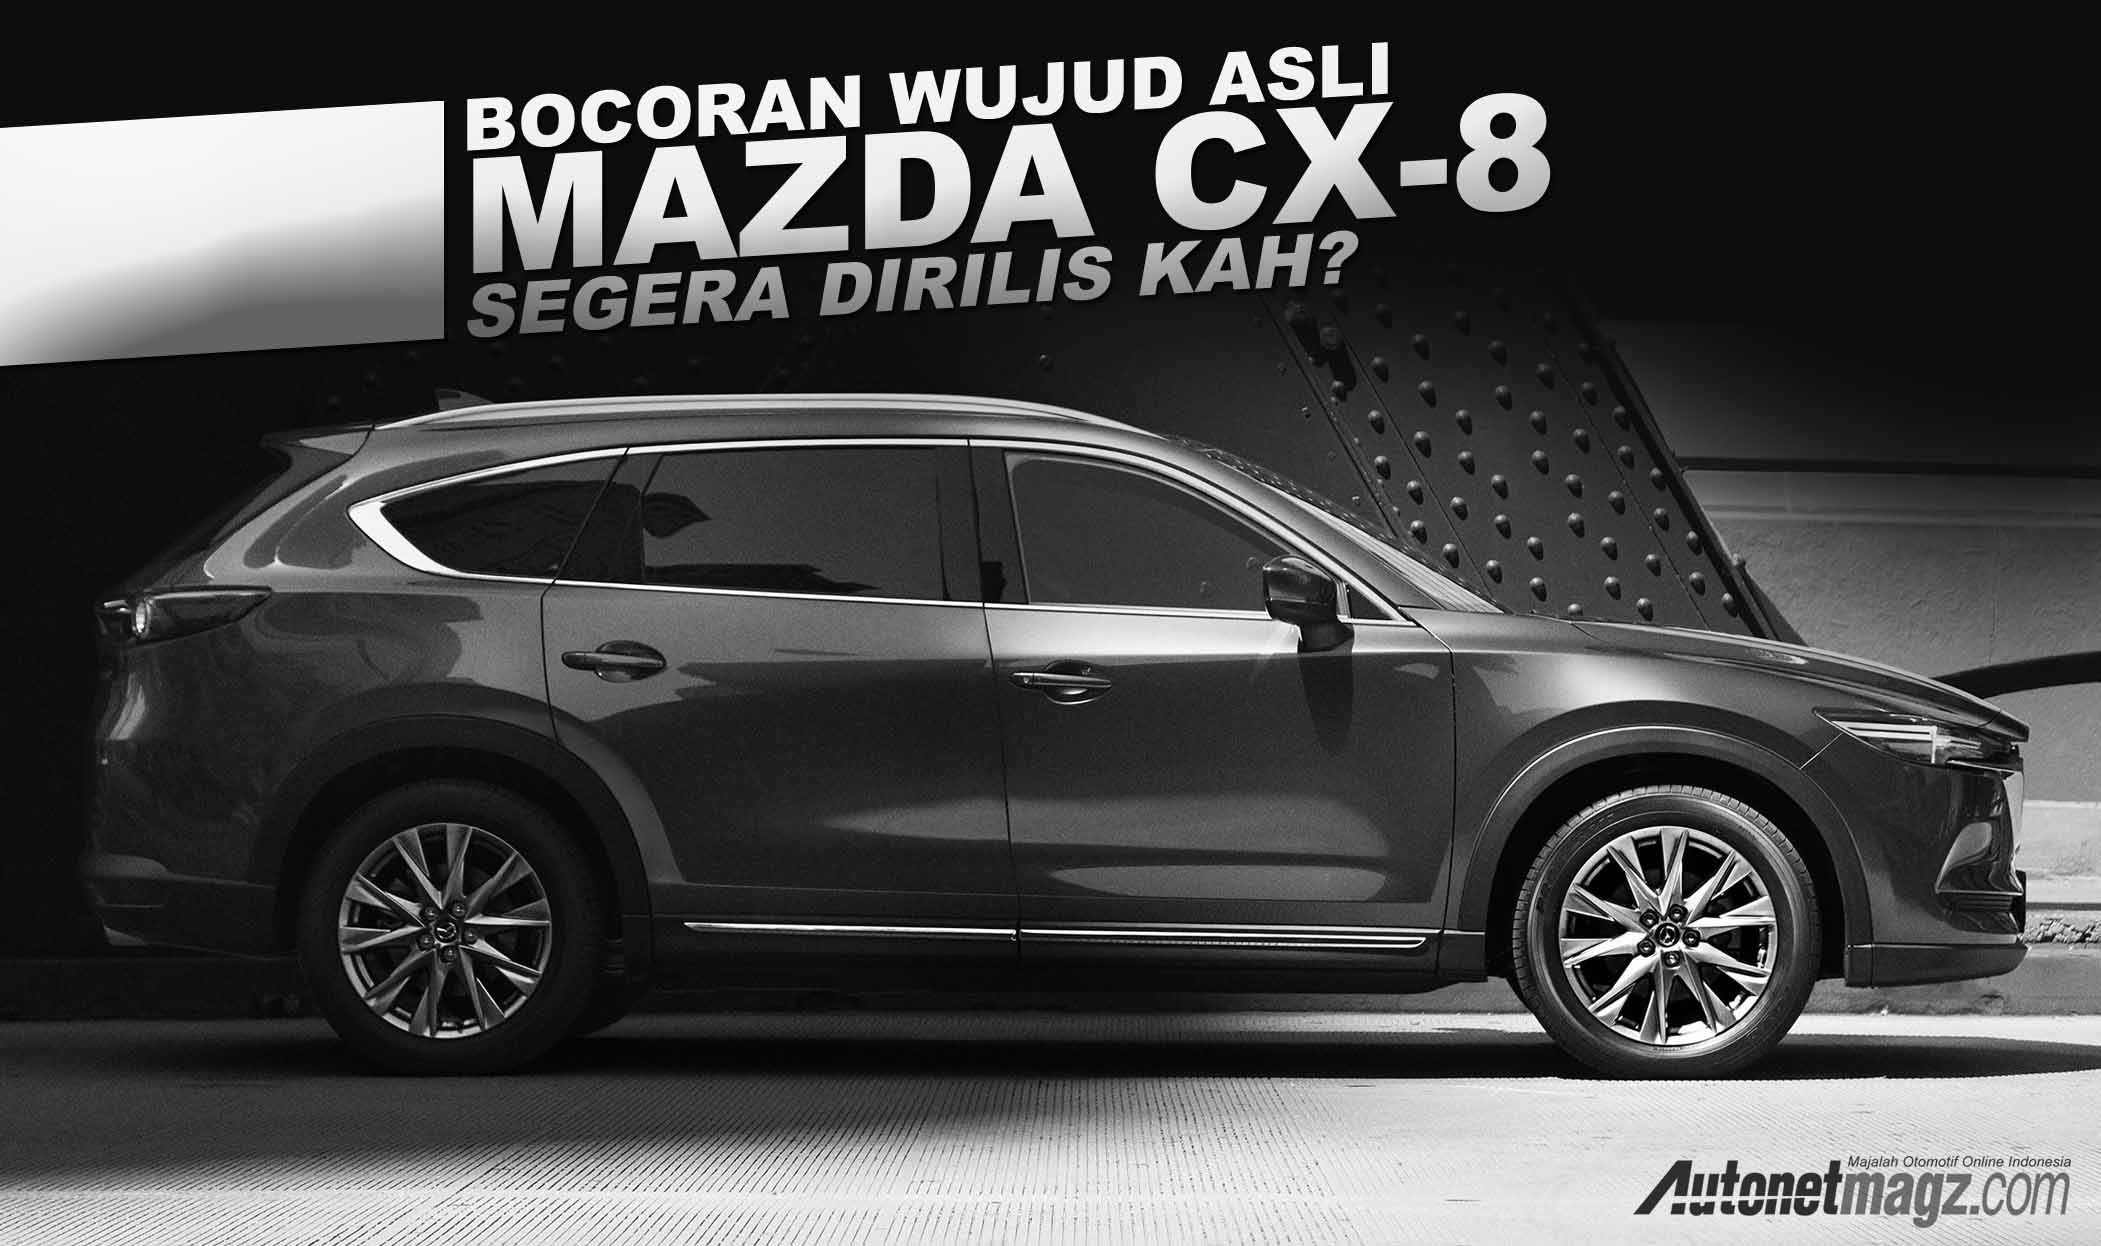 Berita, mazda cx-8 cover: Bocoran Wujud Asli Mazda CX-8, Segera Dirilis Kah?